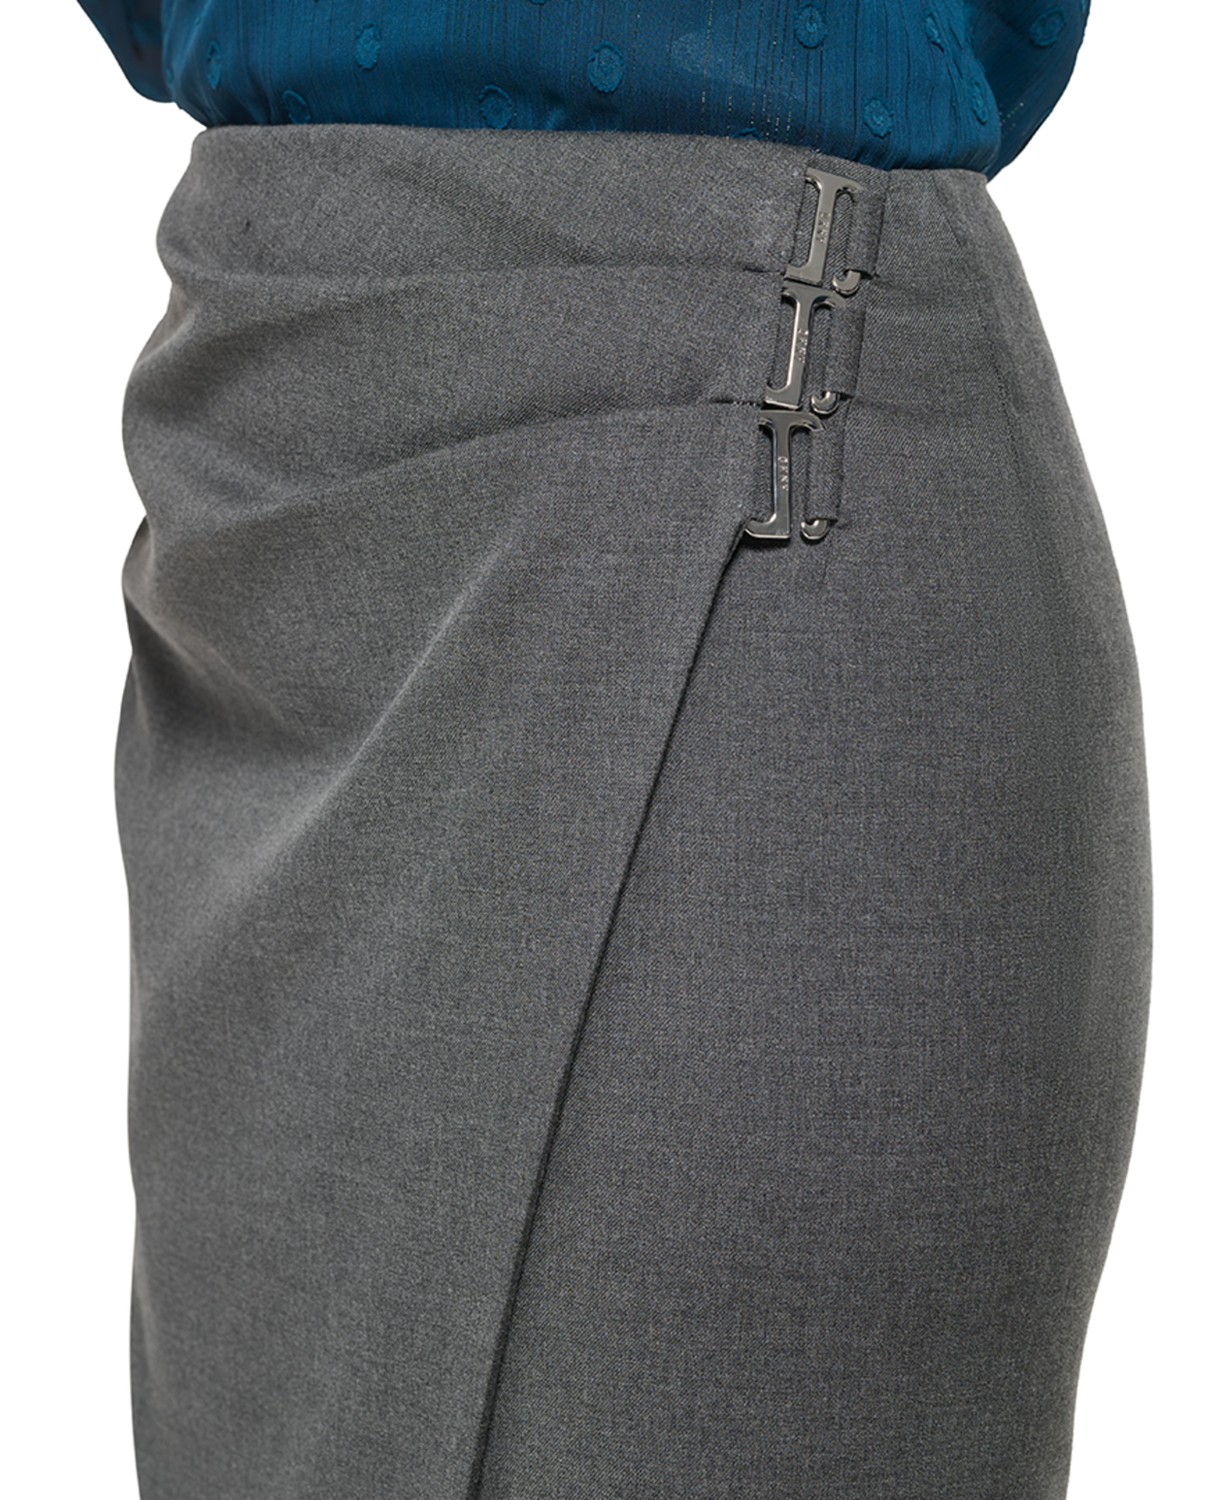 DKNY Womens Faux Wrap Pencil Skirt